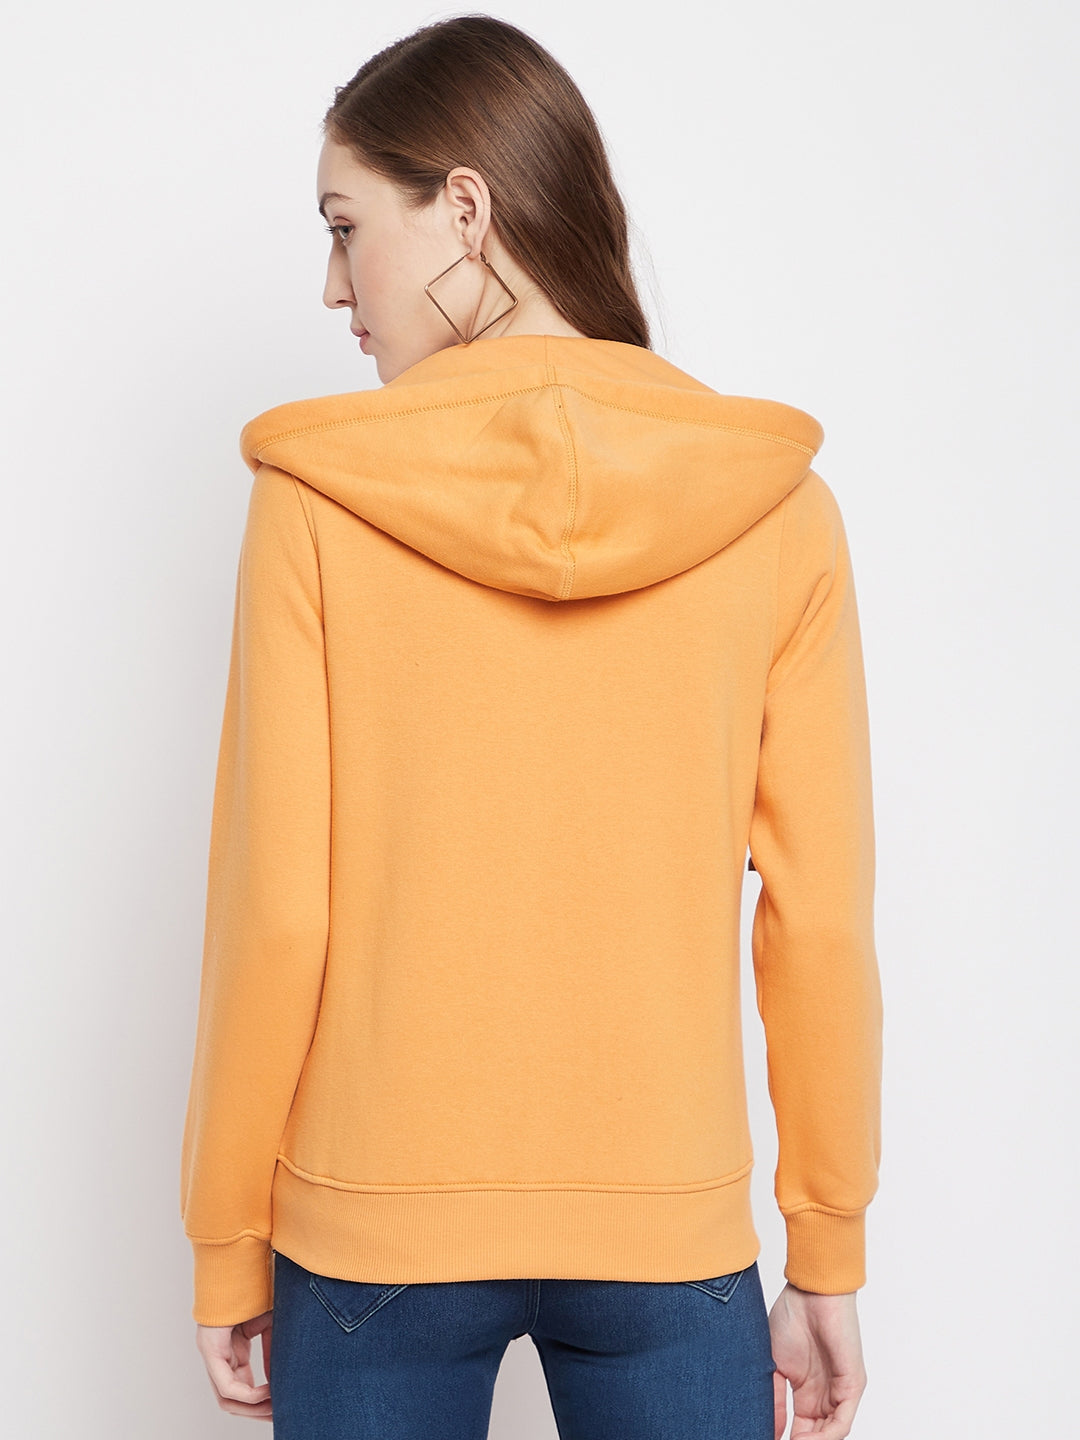 Mustard Hooded Sweatshirt - Women Sweatshirts